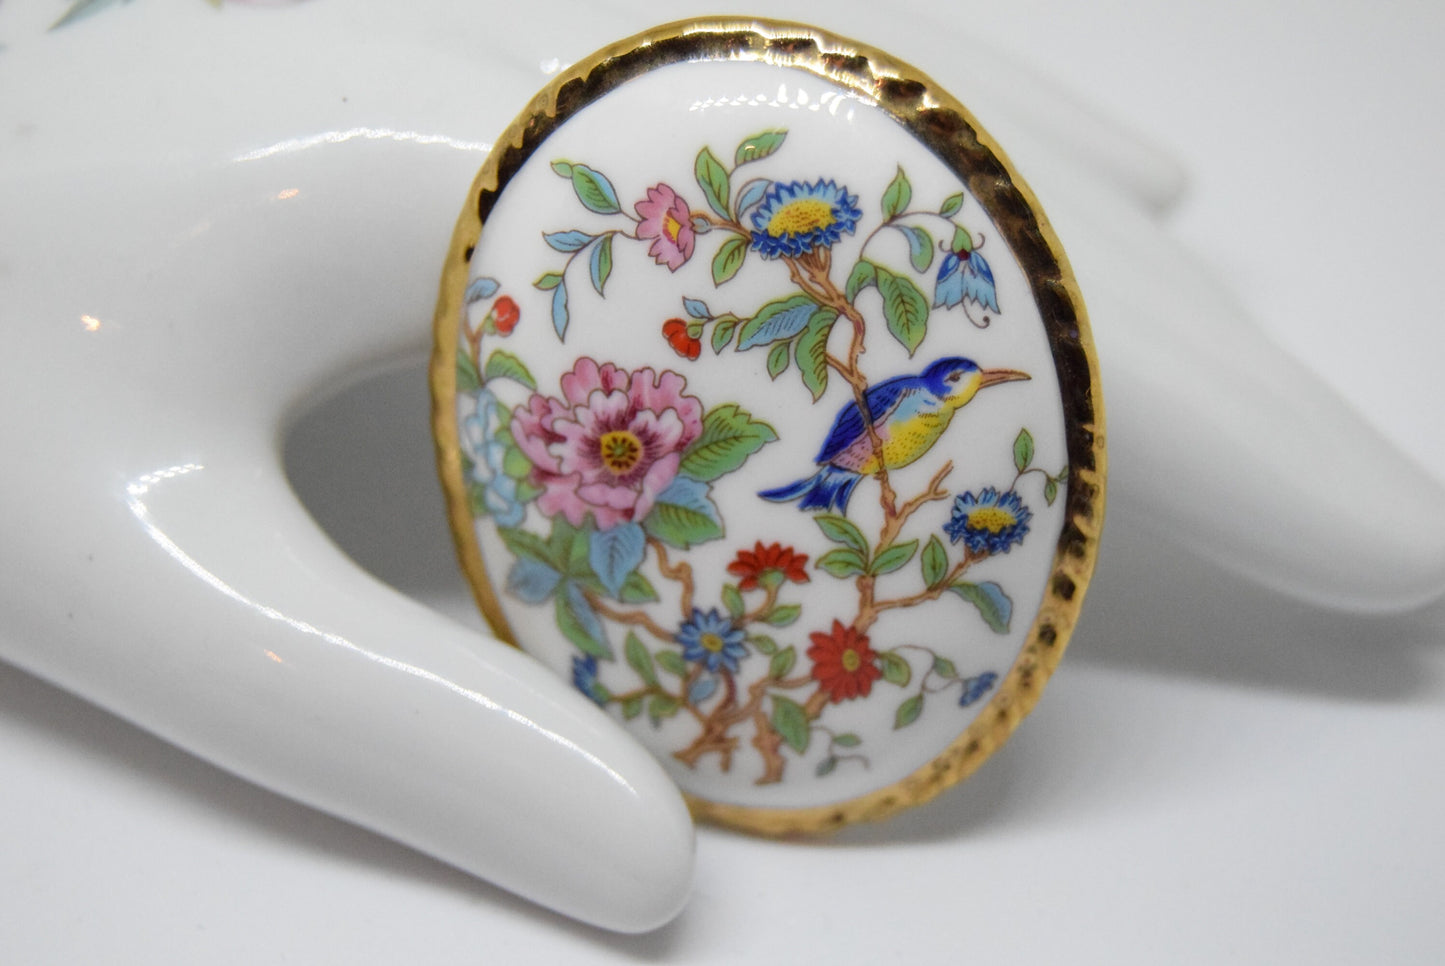 Vintage Art Nouveau Hand Painted Hand Crafted Vintage Floral Art Hummingbird Ceramic